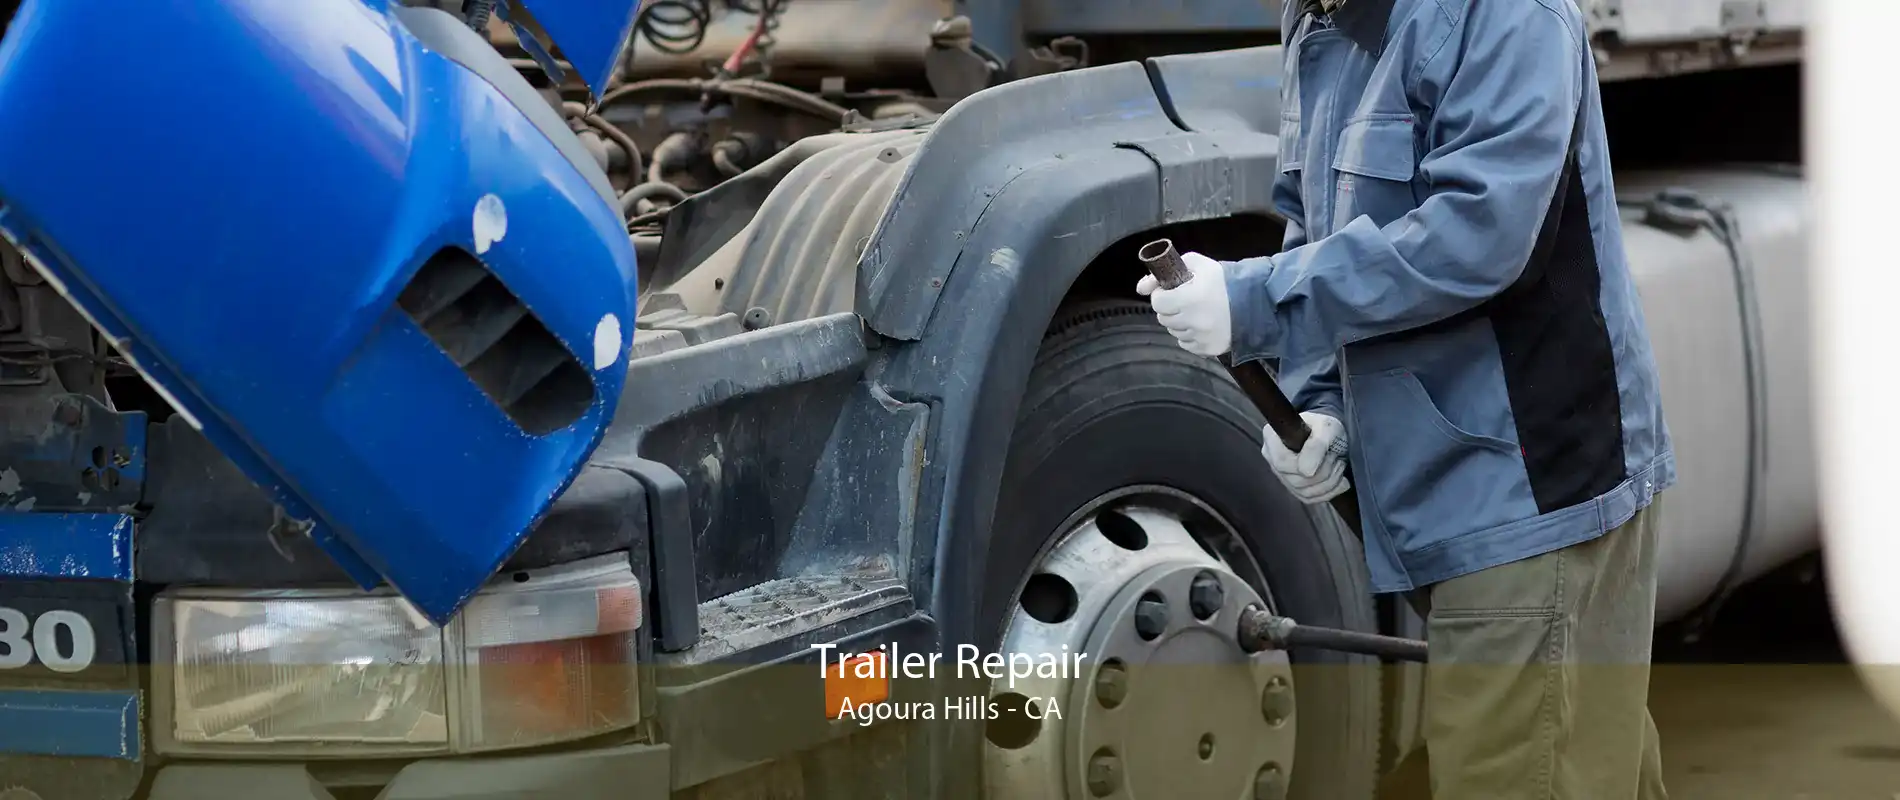 Trailer Repair Agoura Hills - CA